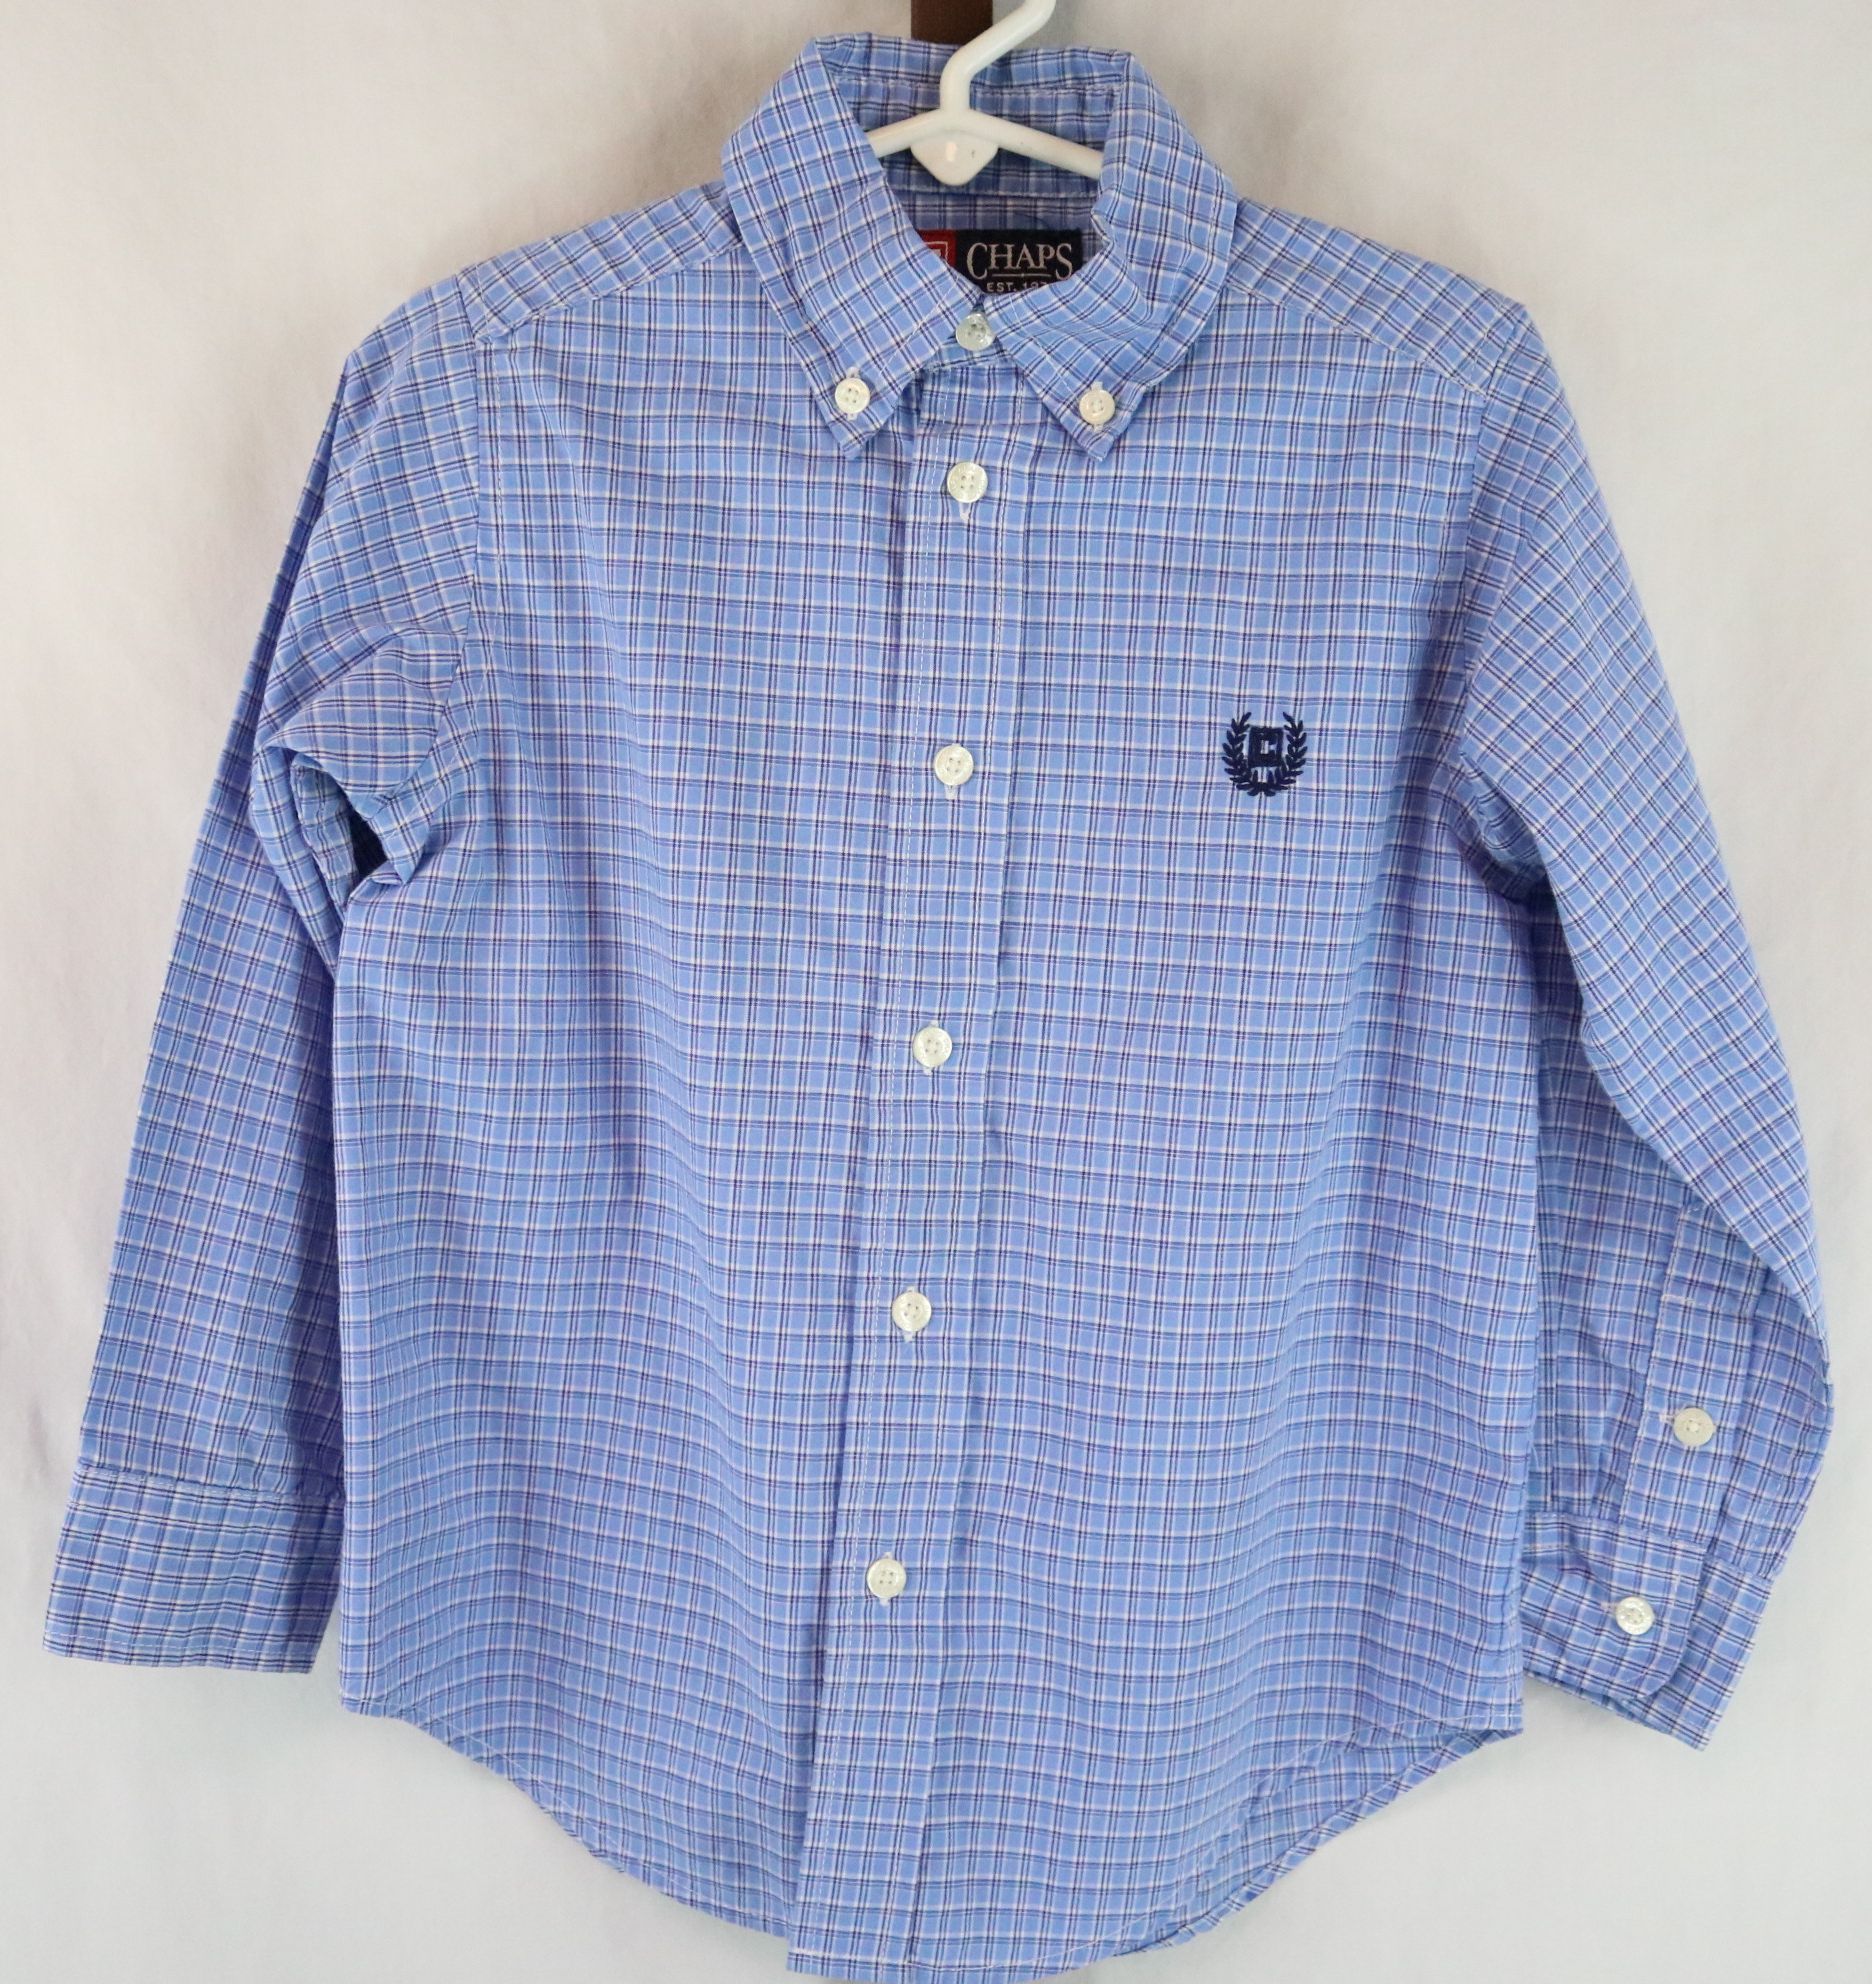 CHAPS Toddler Boy's Light Blue Plaid Button-Up Shirt Casual Dress Size ...